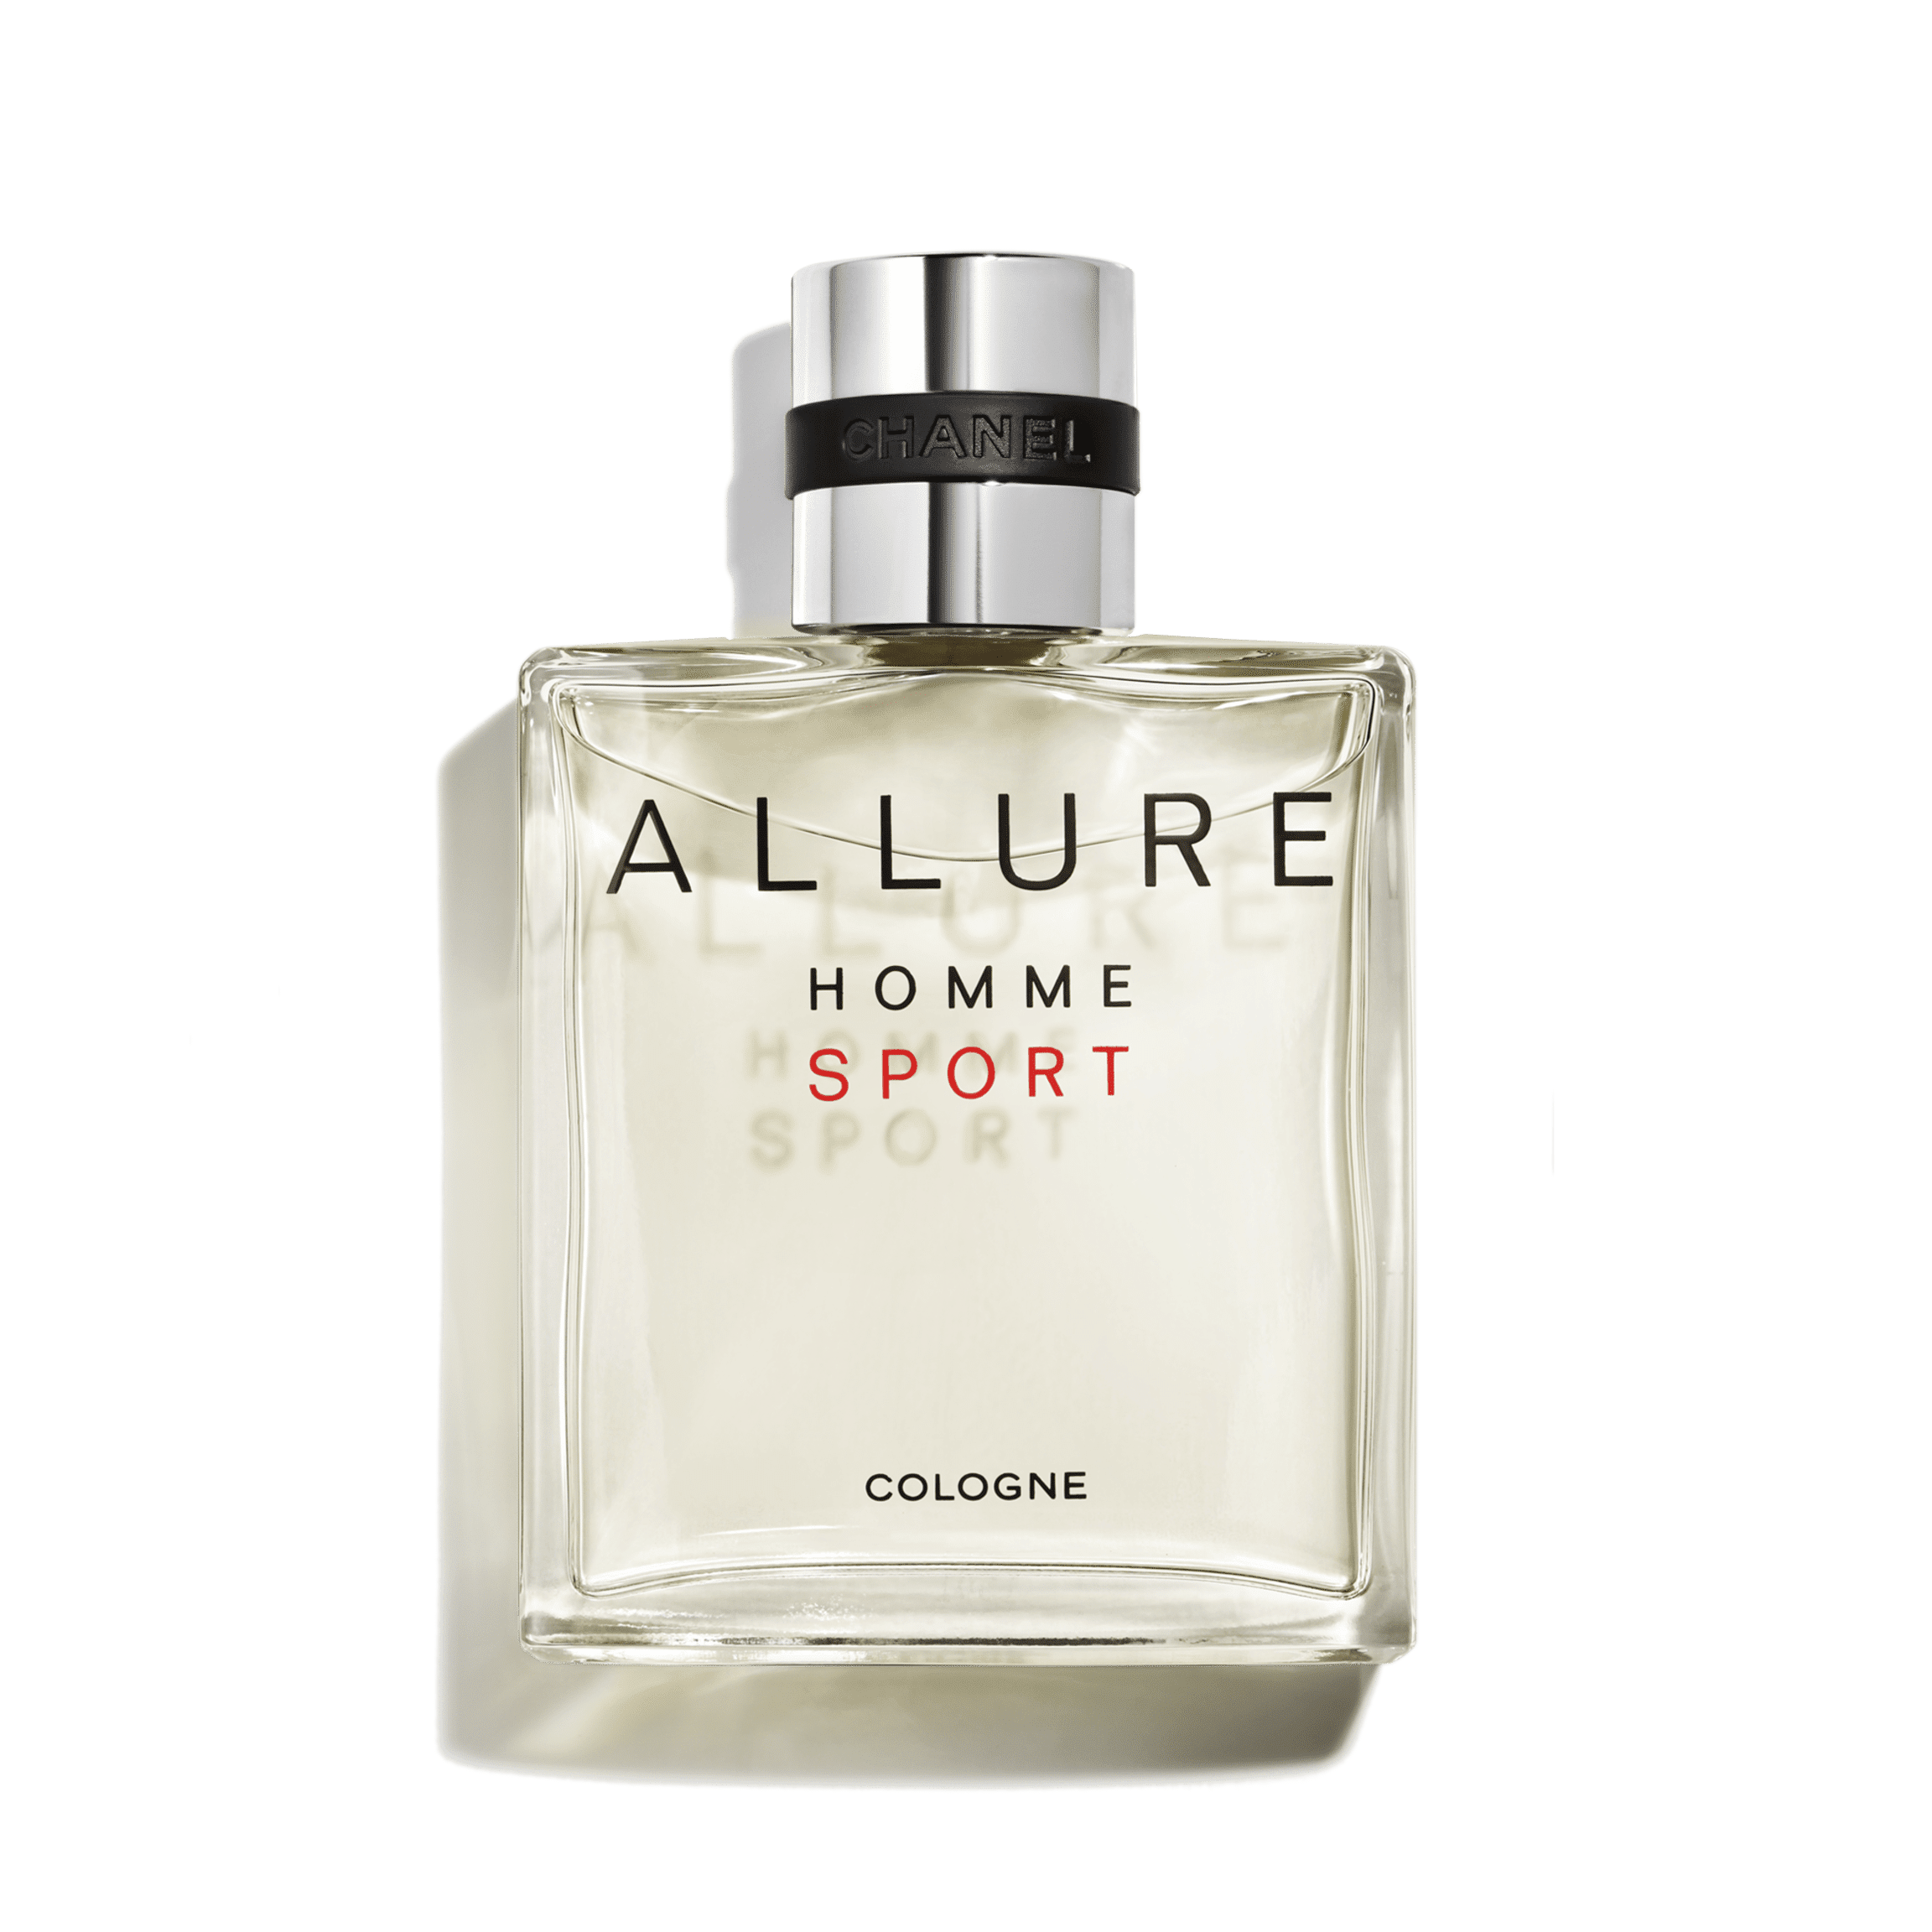 Chanel ALLURE HOMME SPORT Cologne For Men 3.4 fl oz / 100 ml Spray